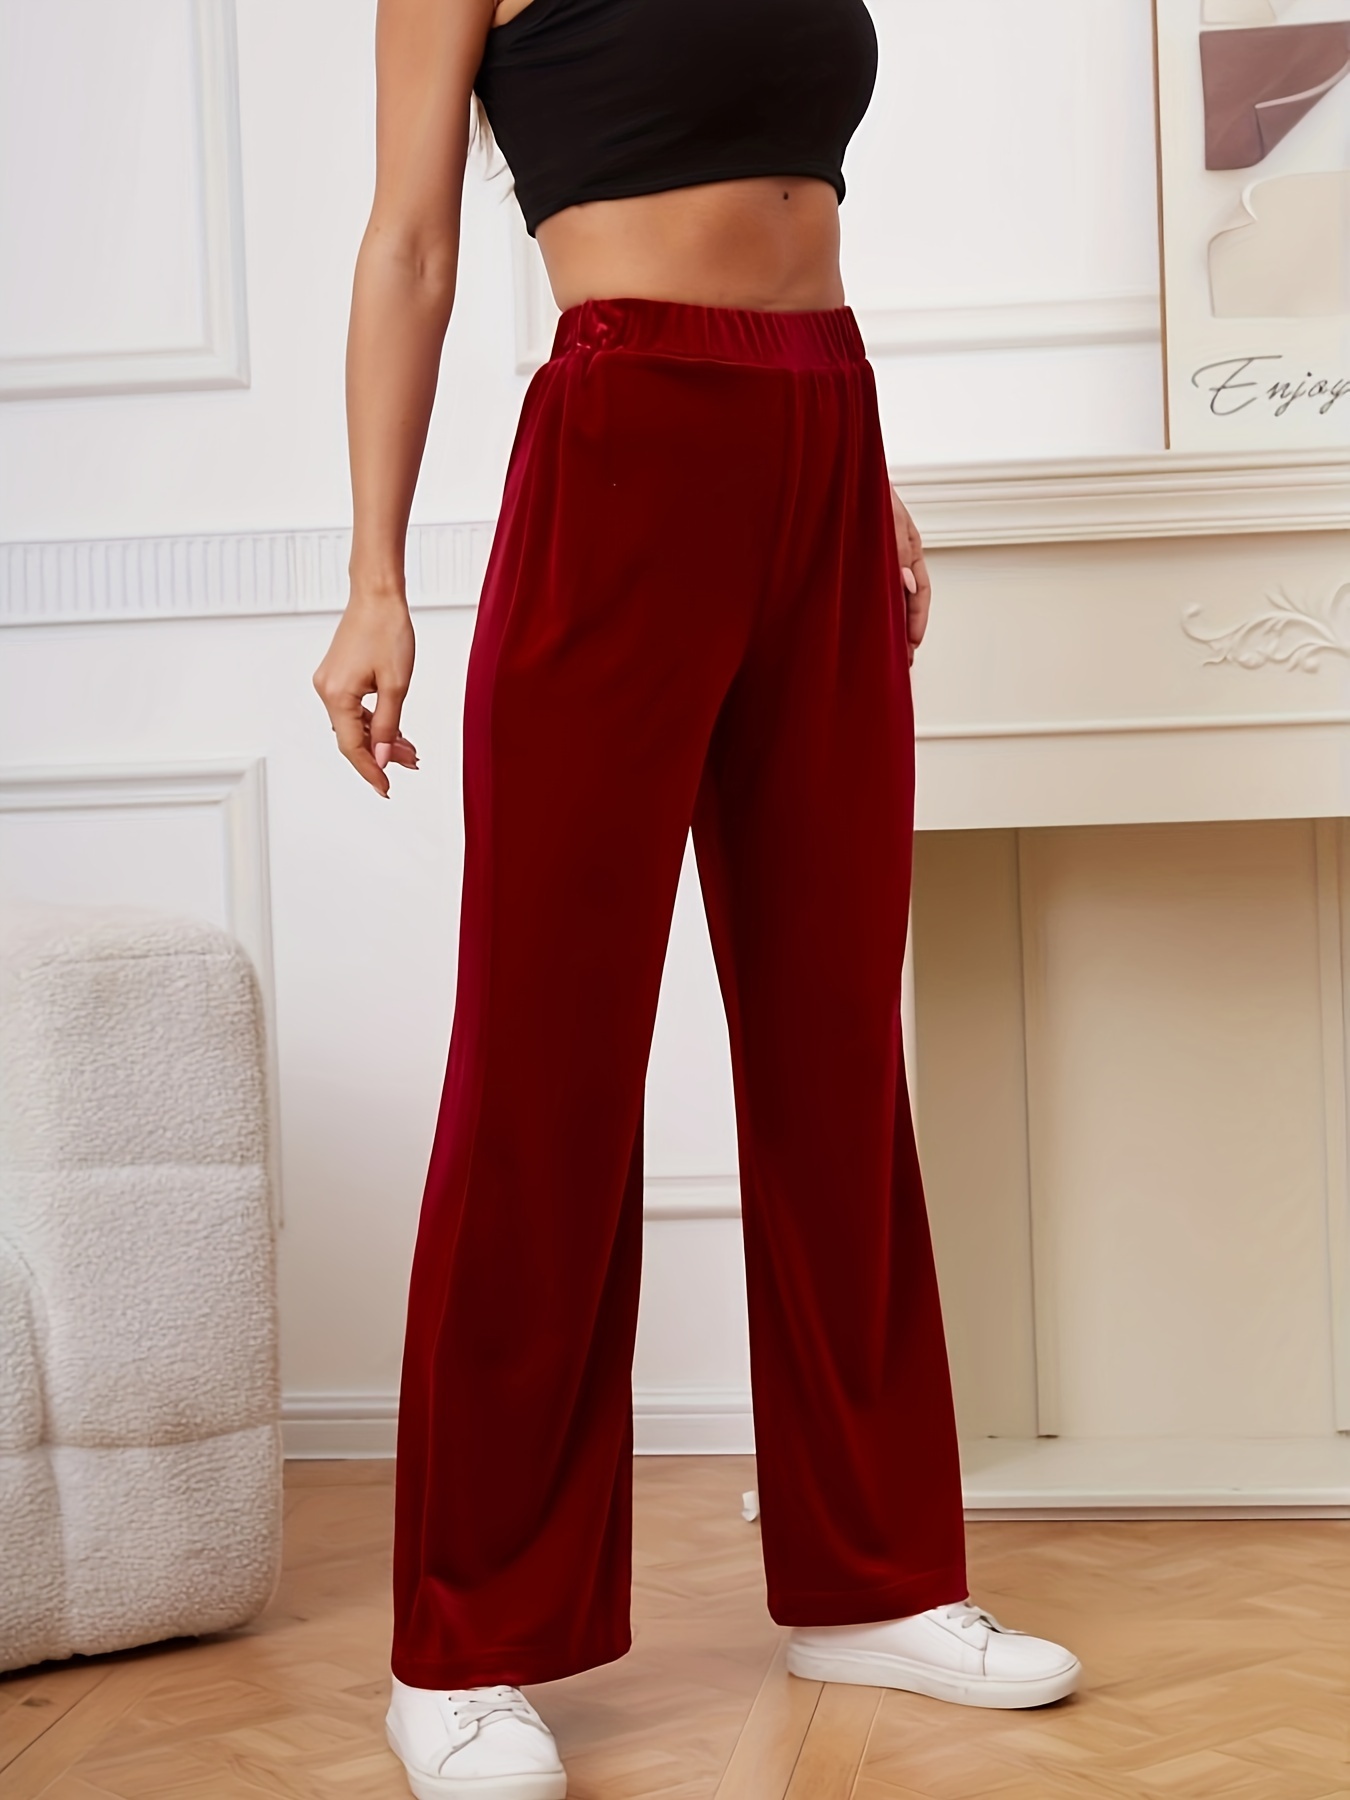 Elastic Waist High Quality Female Casual Women Pants Velvet Pants